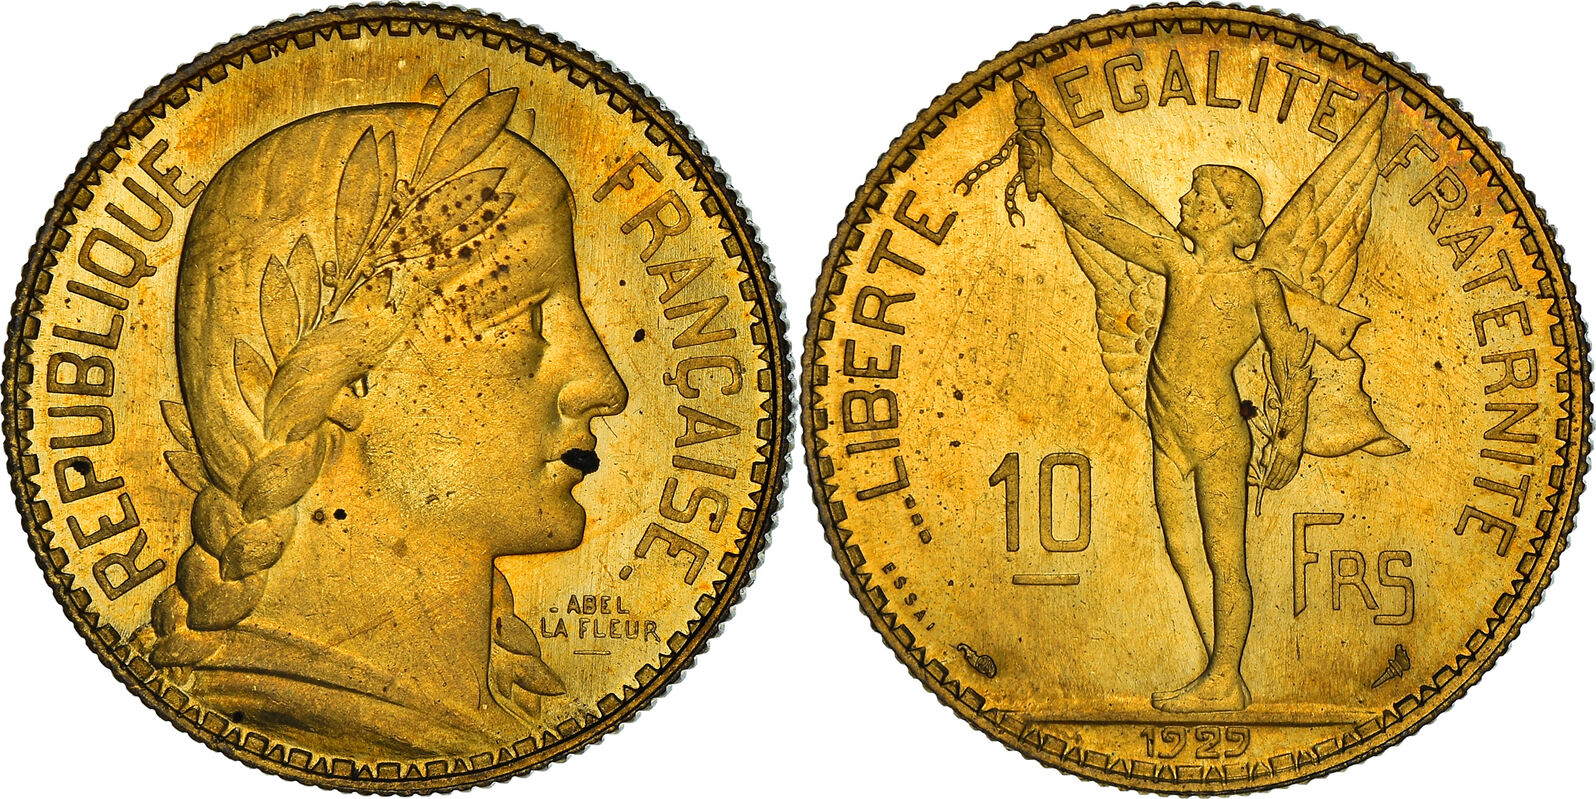 10 Francs. Доллар 1929 монета. Morocco 5 Francs 1929. Morocco 10 Francs - Mohammed v (essai) ND (1928).